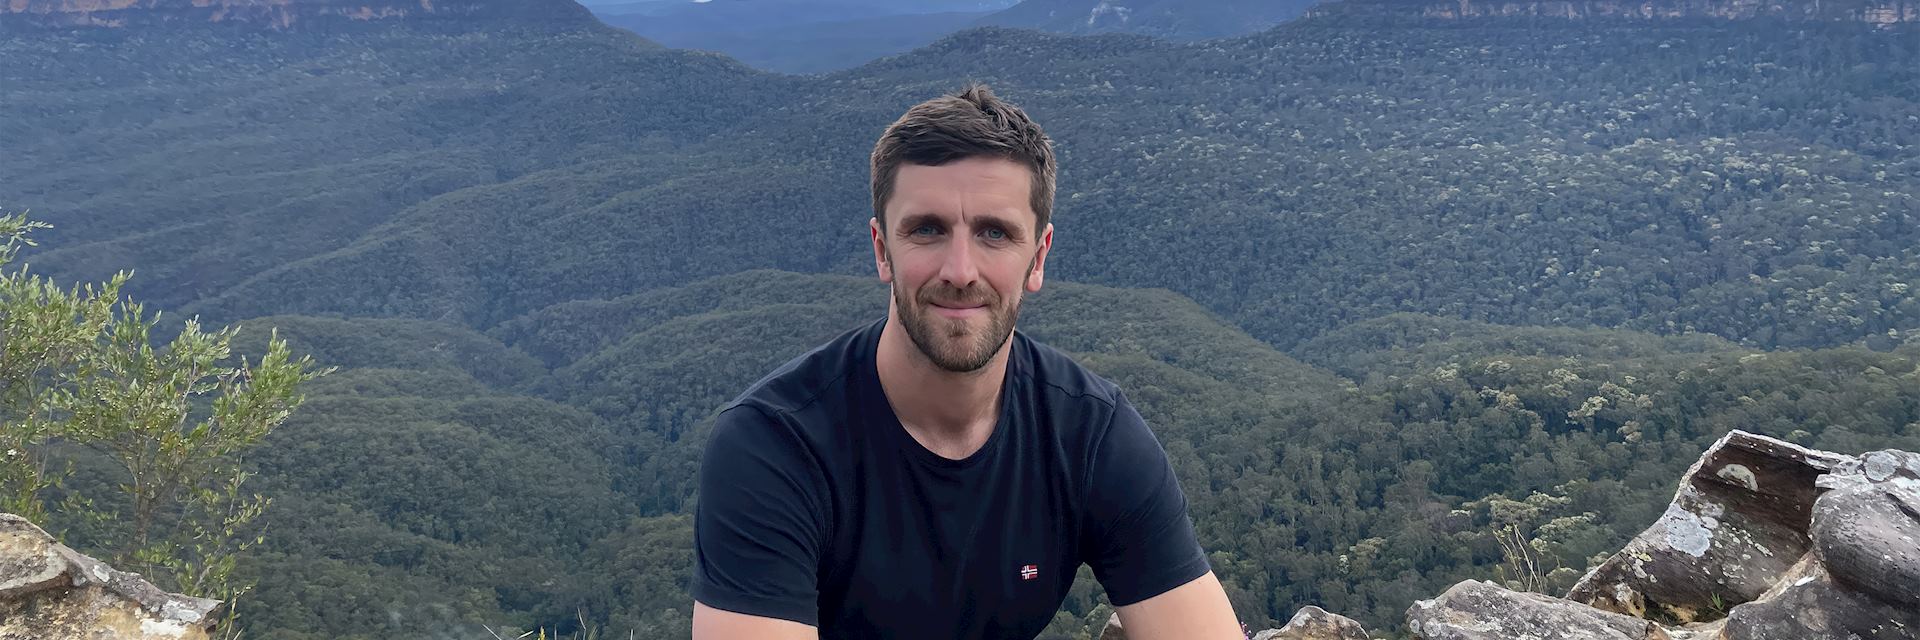 Joe in the Blue Mountains, Australia